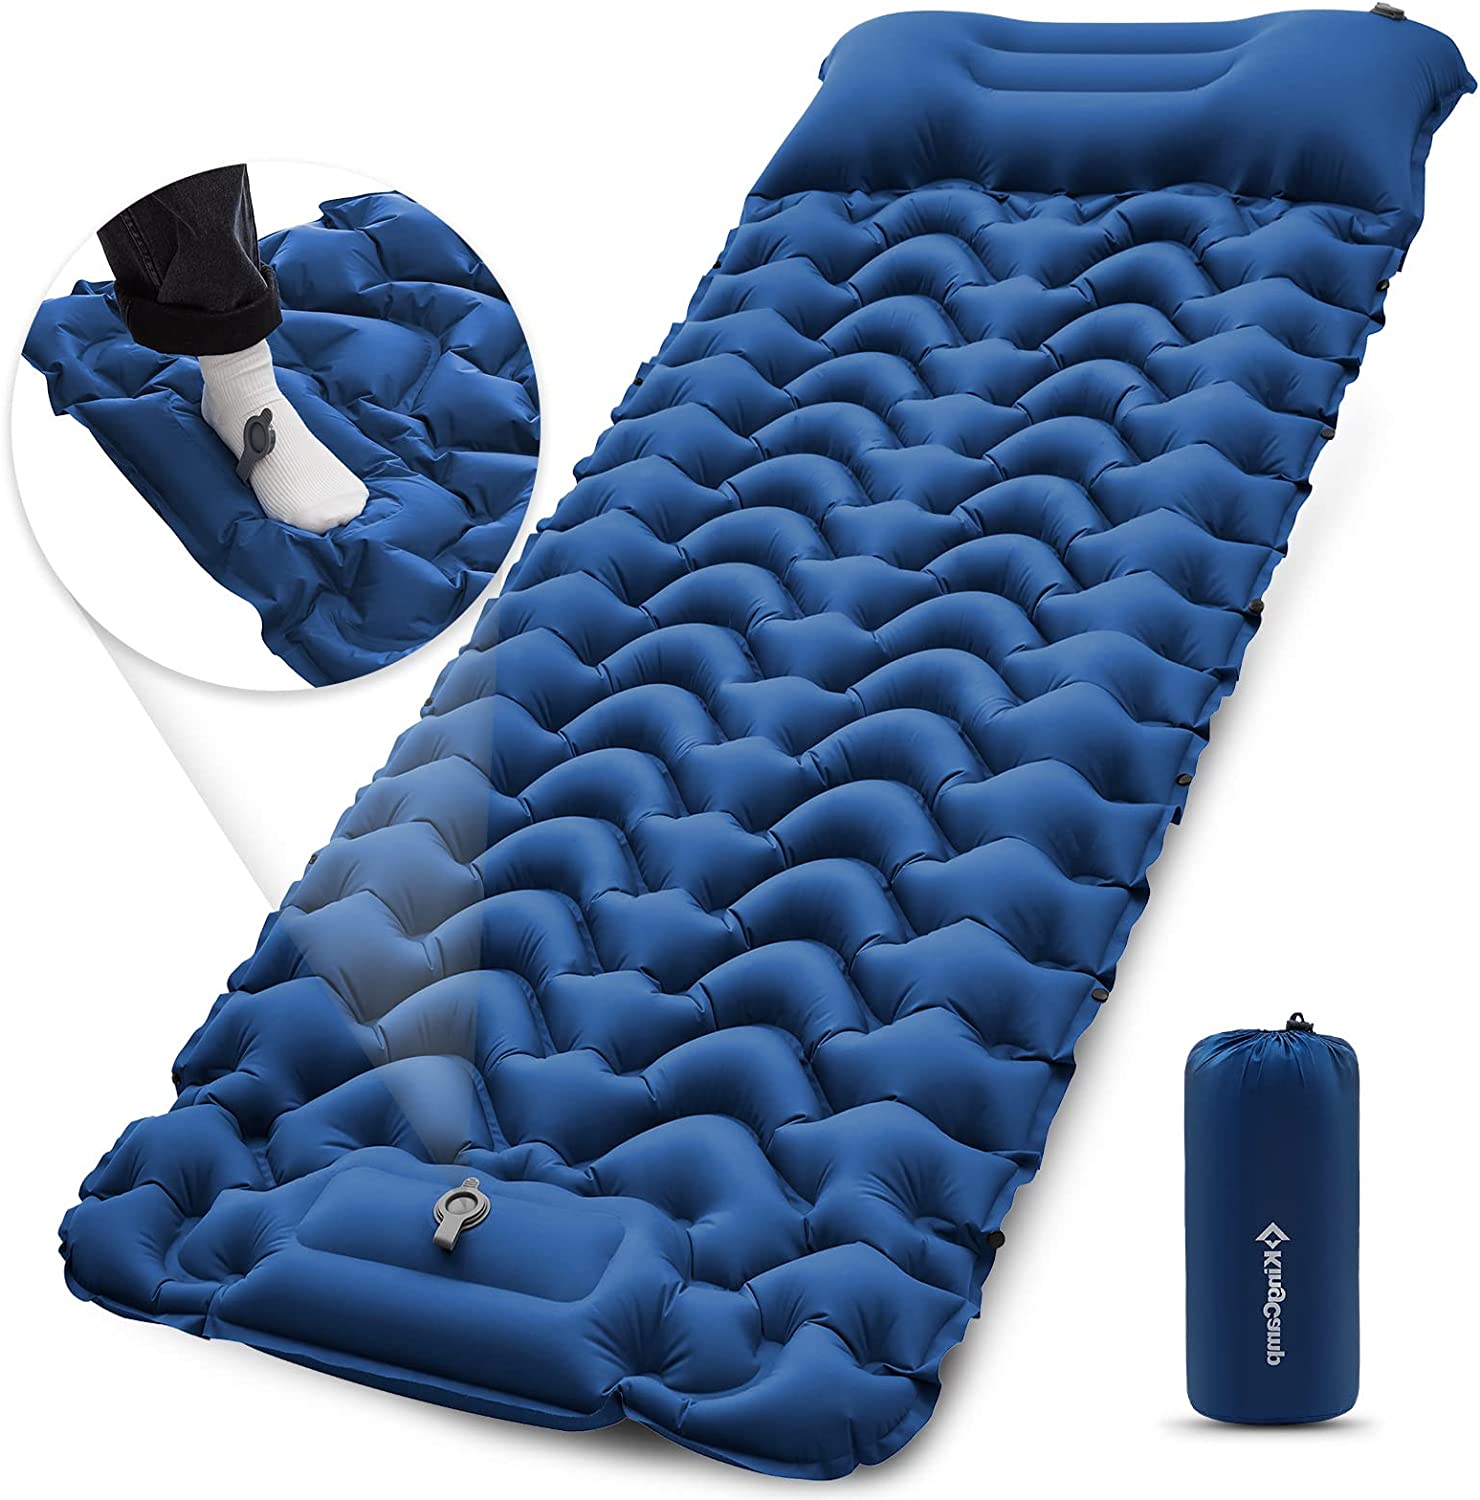 KingCamp Double Insulated Air Mattress Sleeping Pad